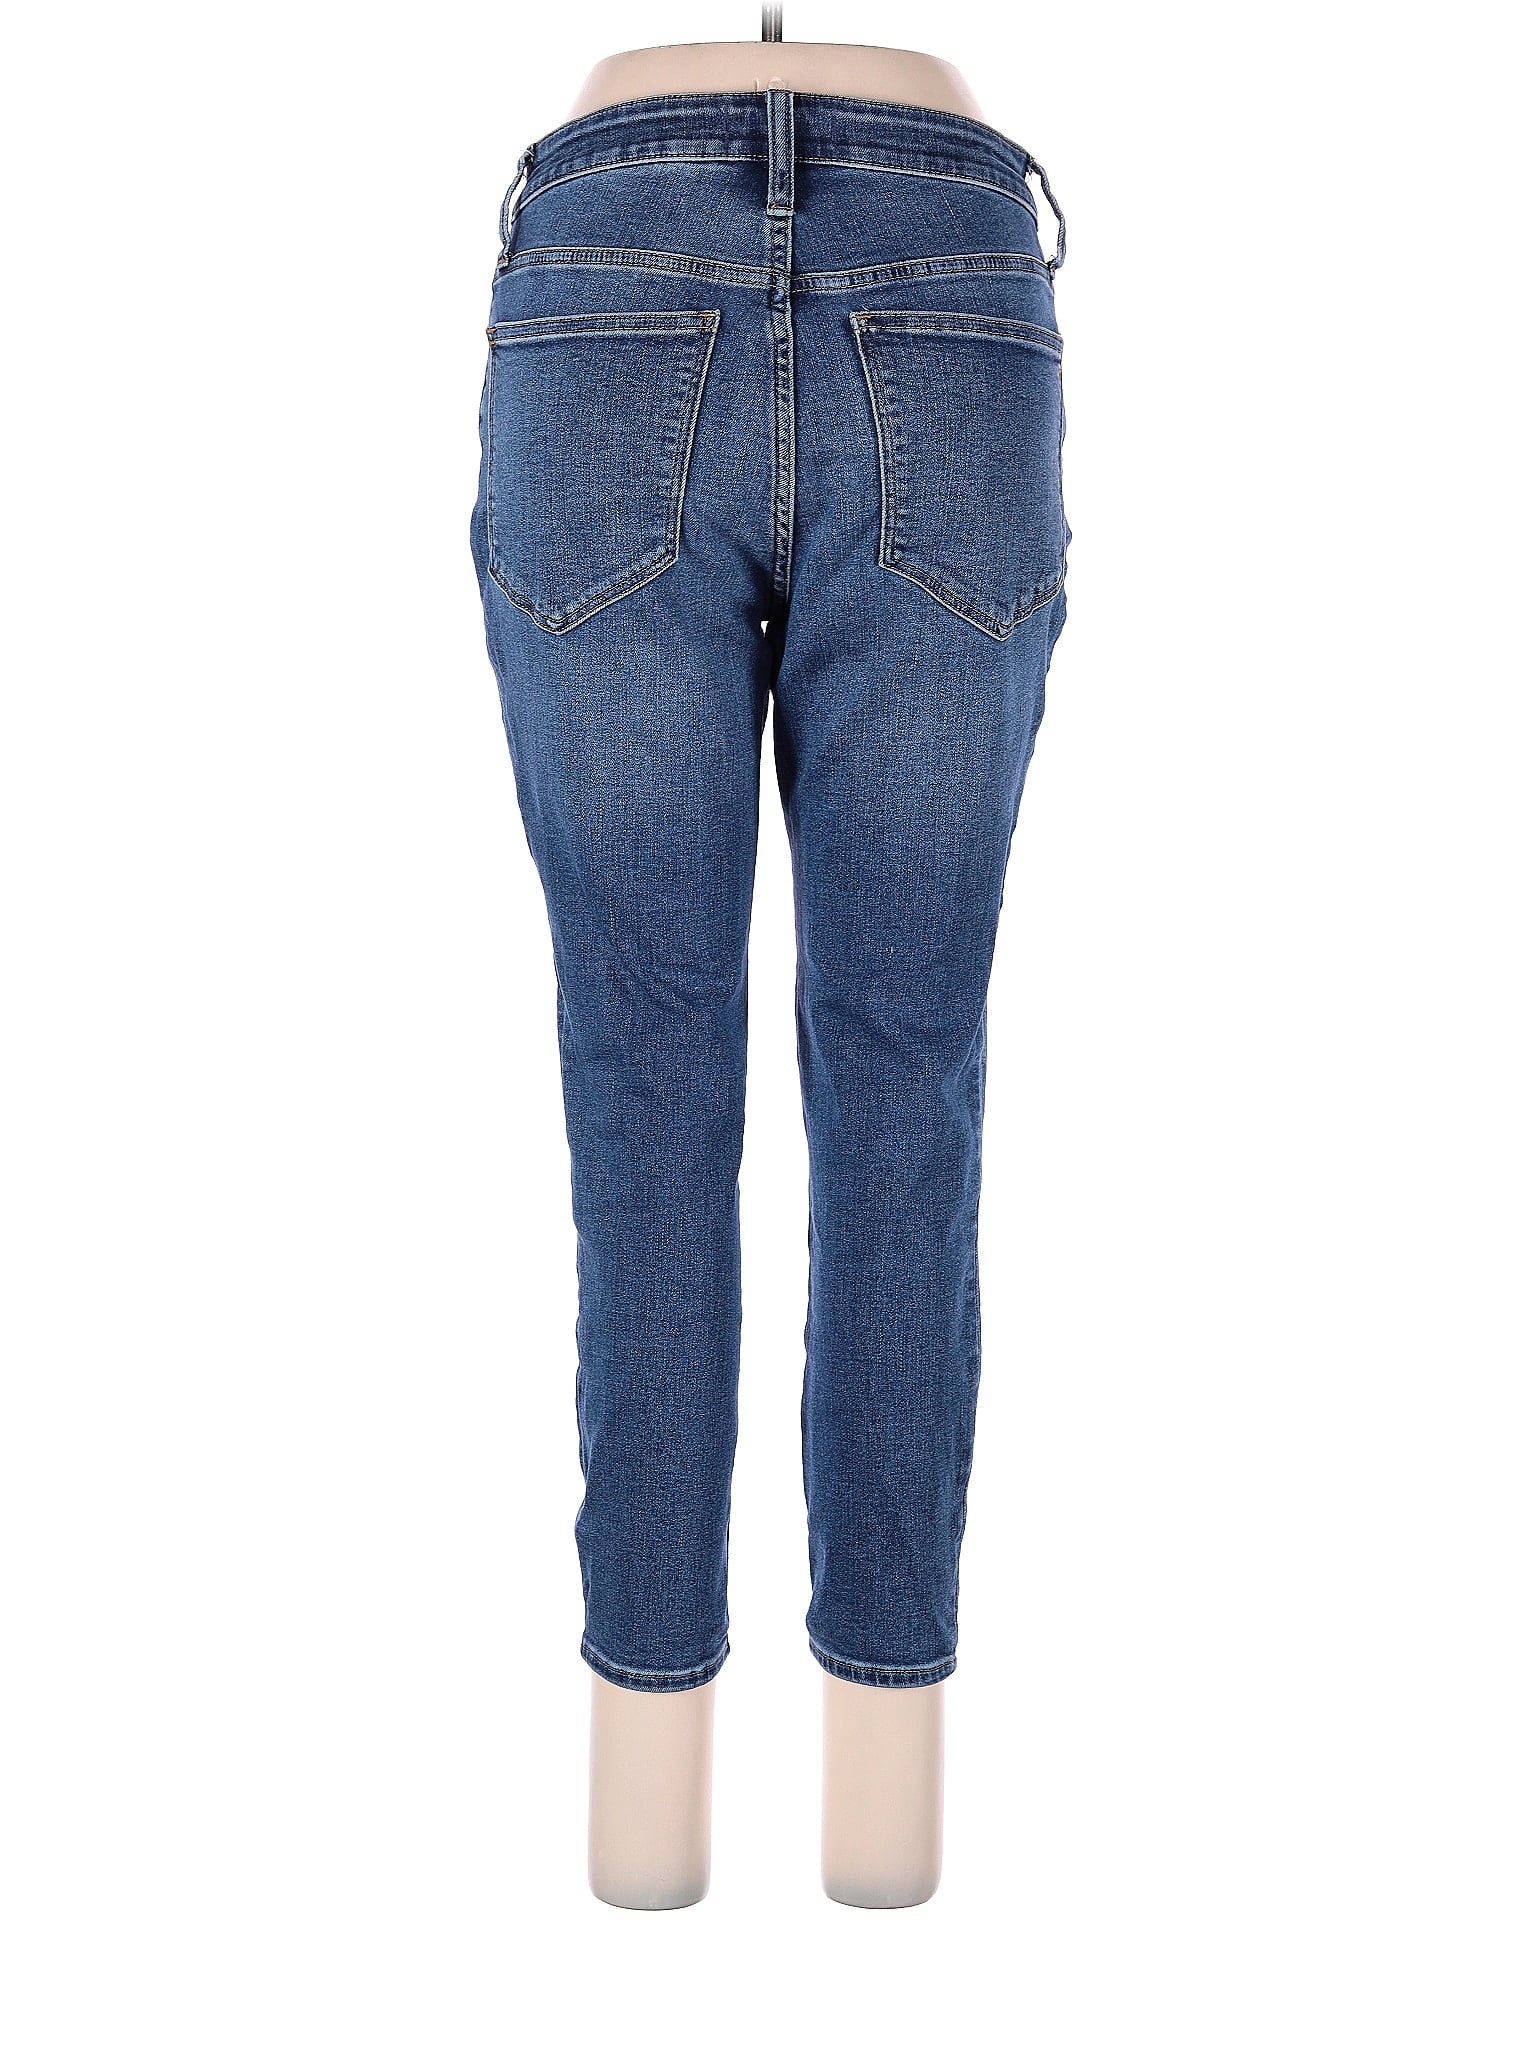 High-Rise Boyjeans Jeans in Medium Wash waist size - 28 P